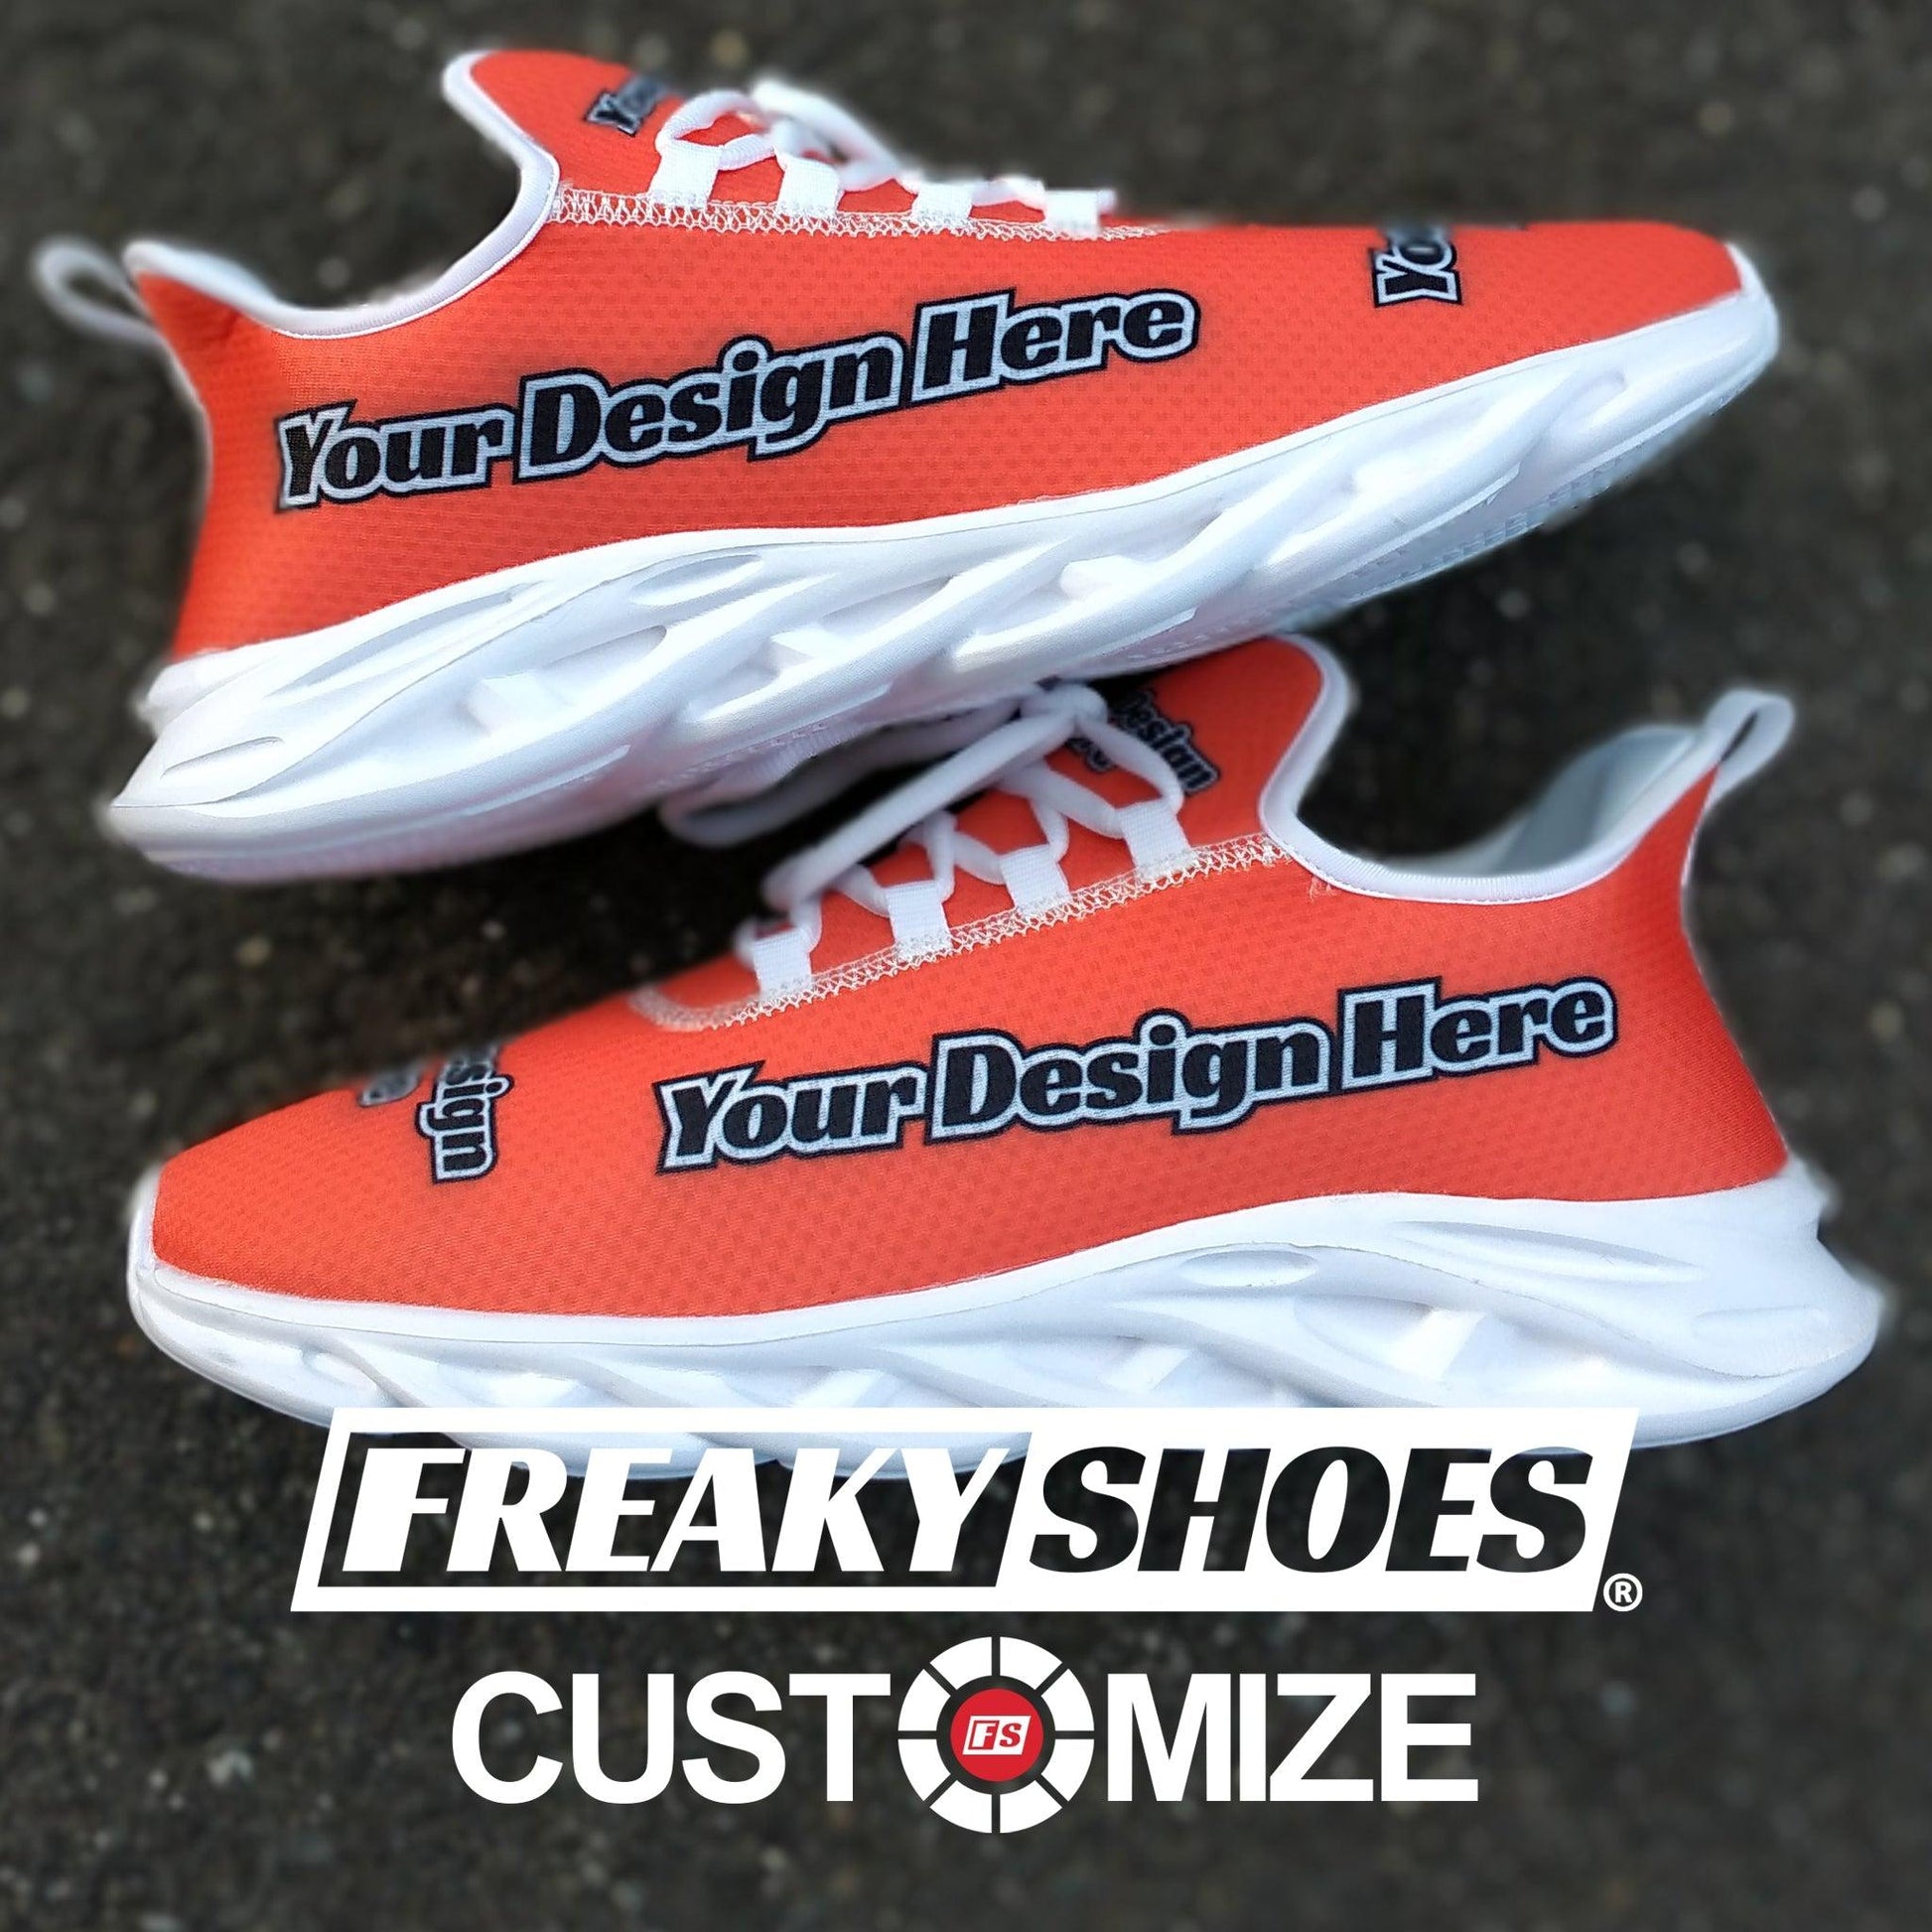 BOUNCE - I am a Designer - Customizable basketball shoes - Freakyshoes